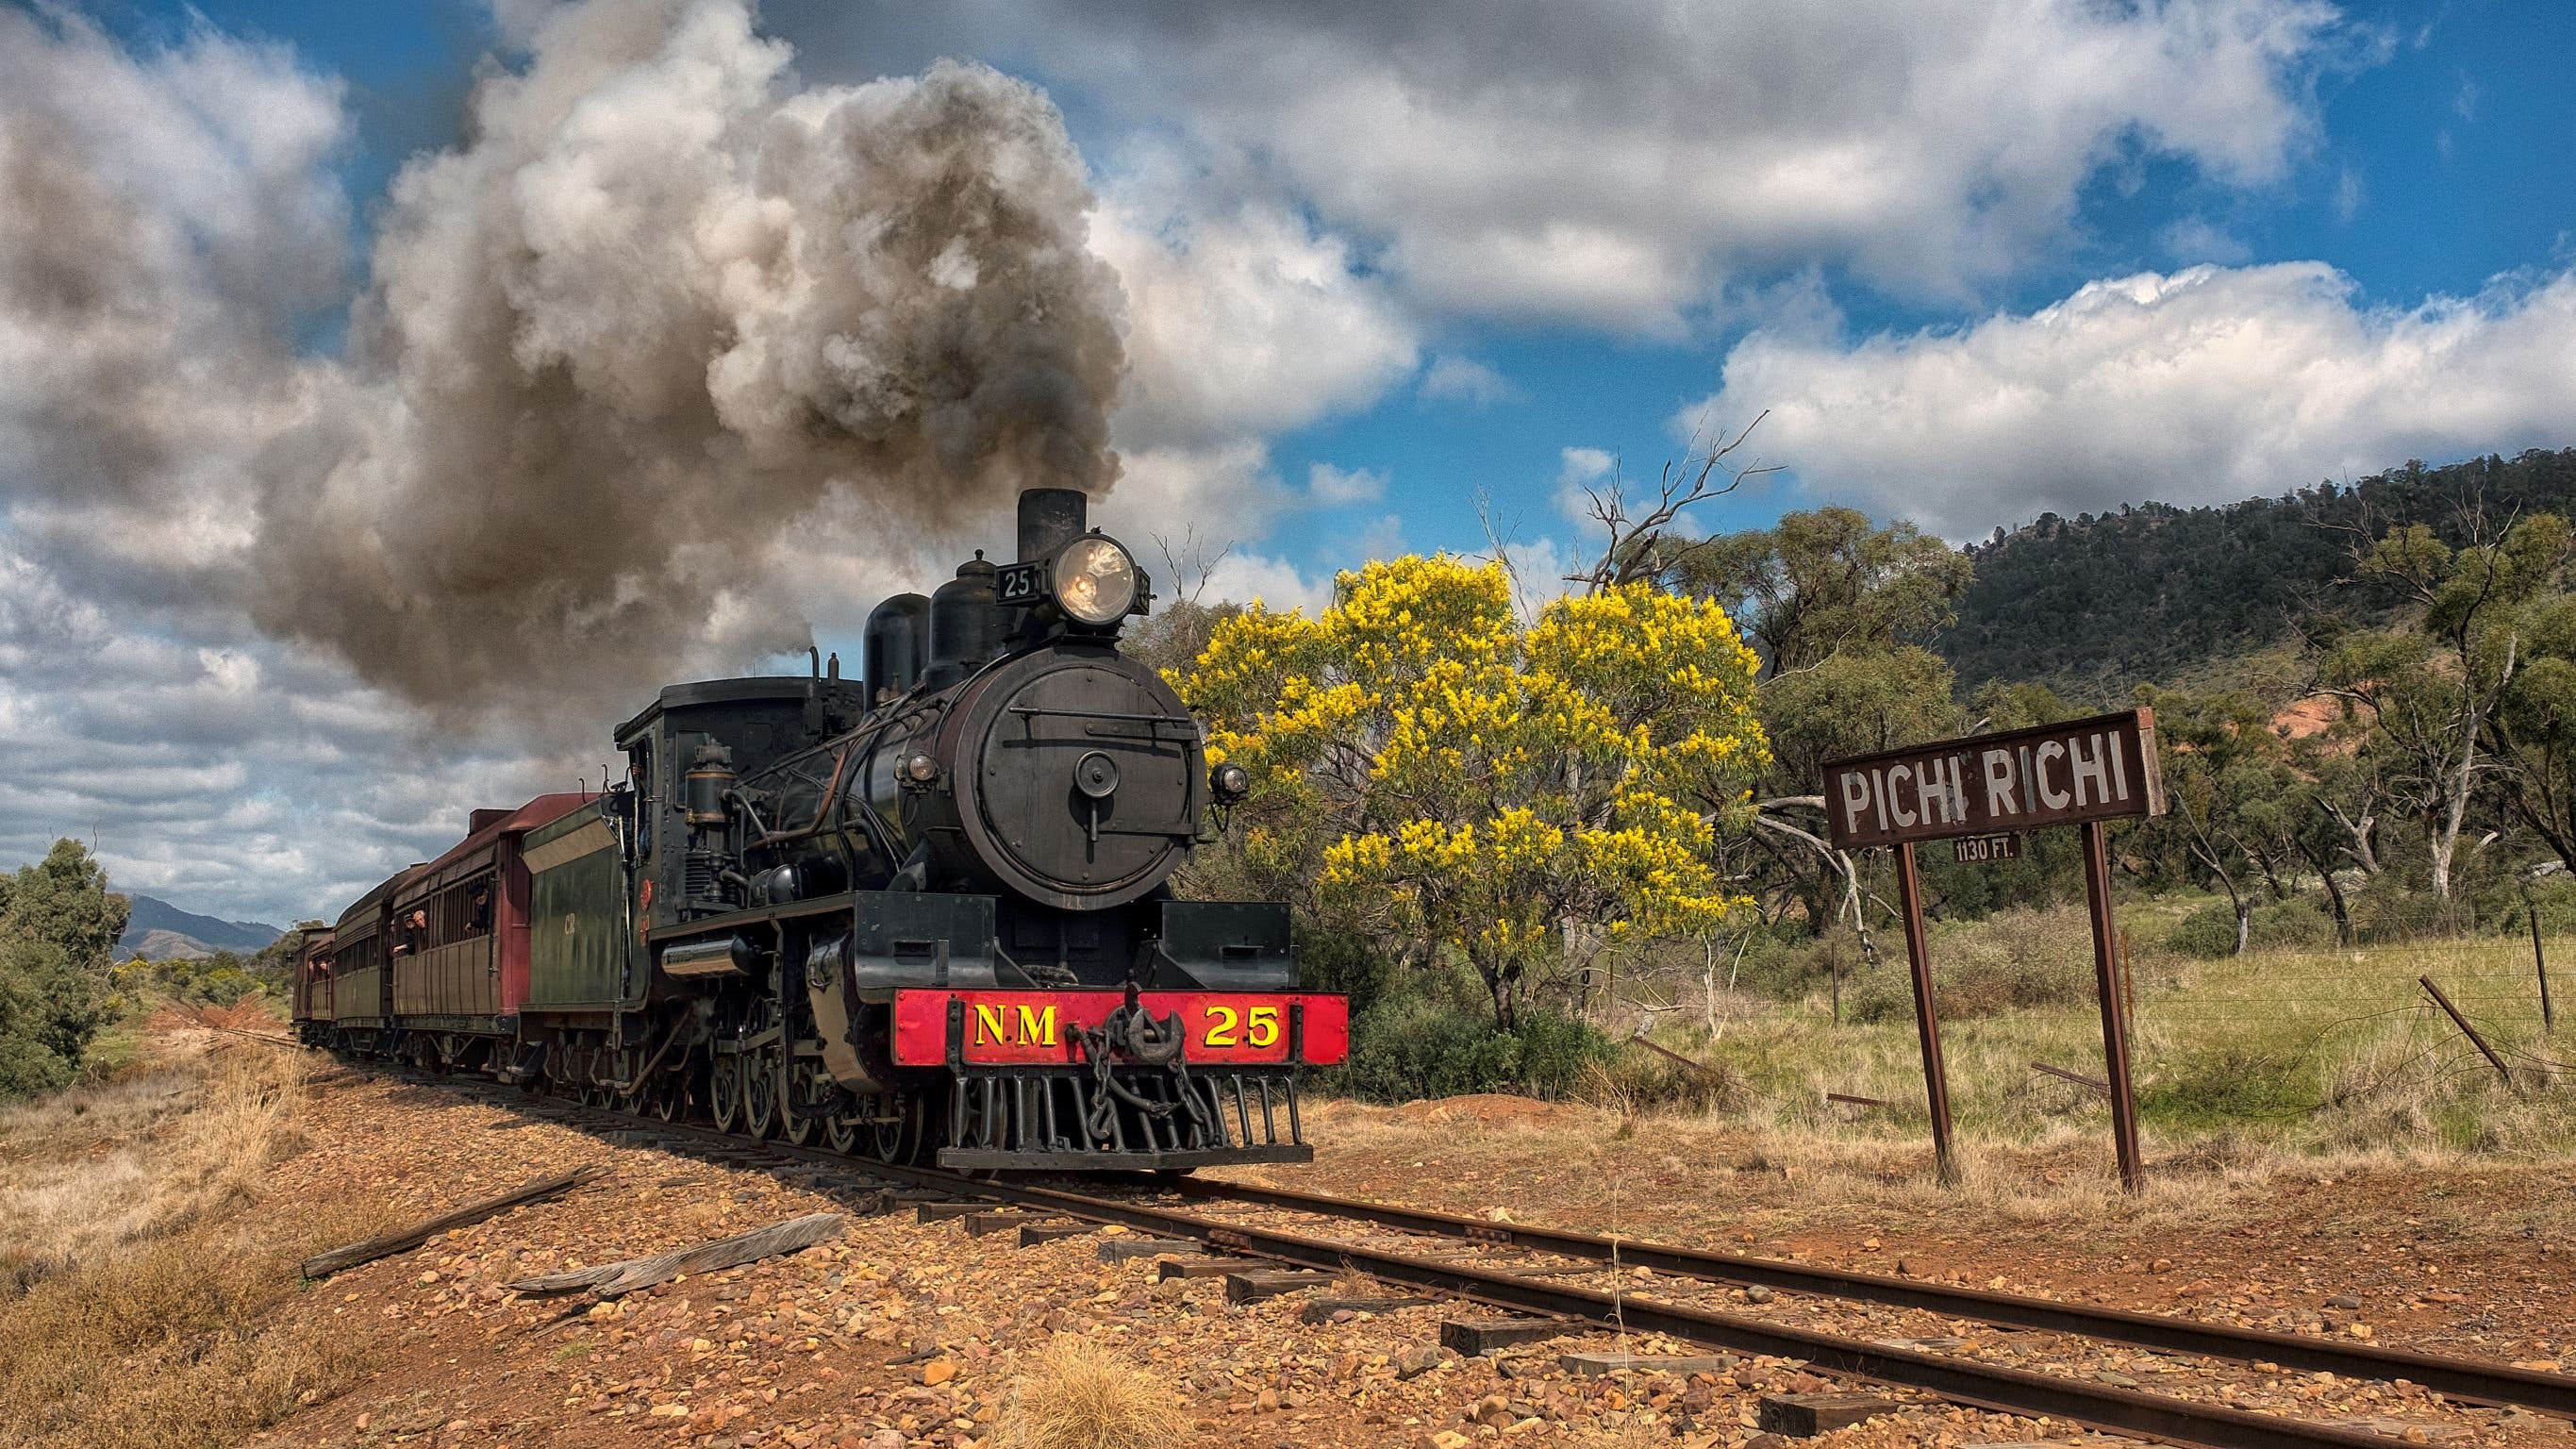 Pichi Richi Railway - Geraldton Accommodation